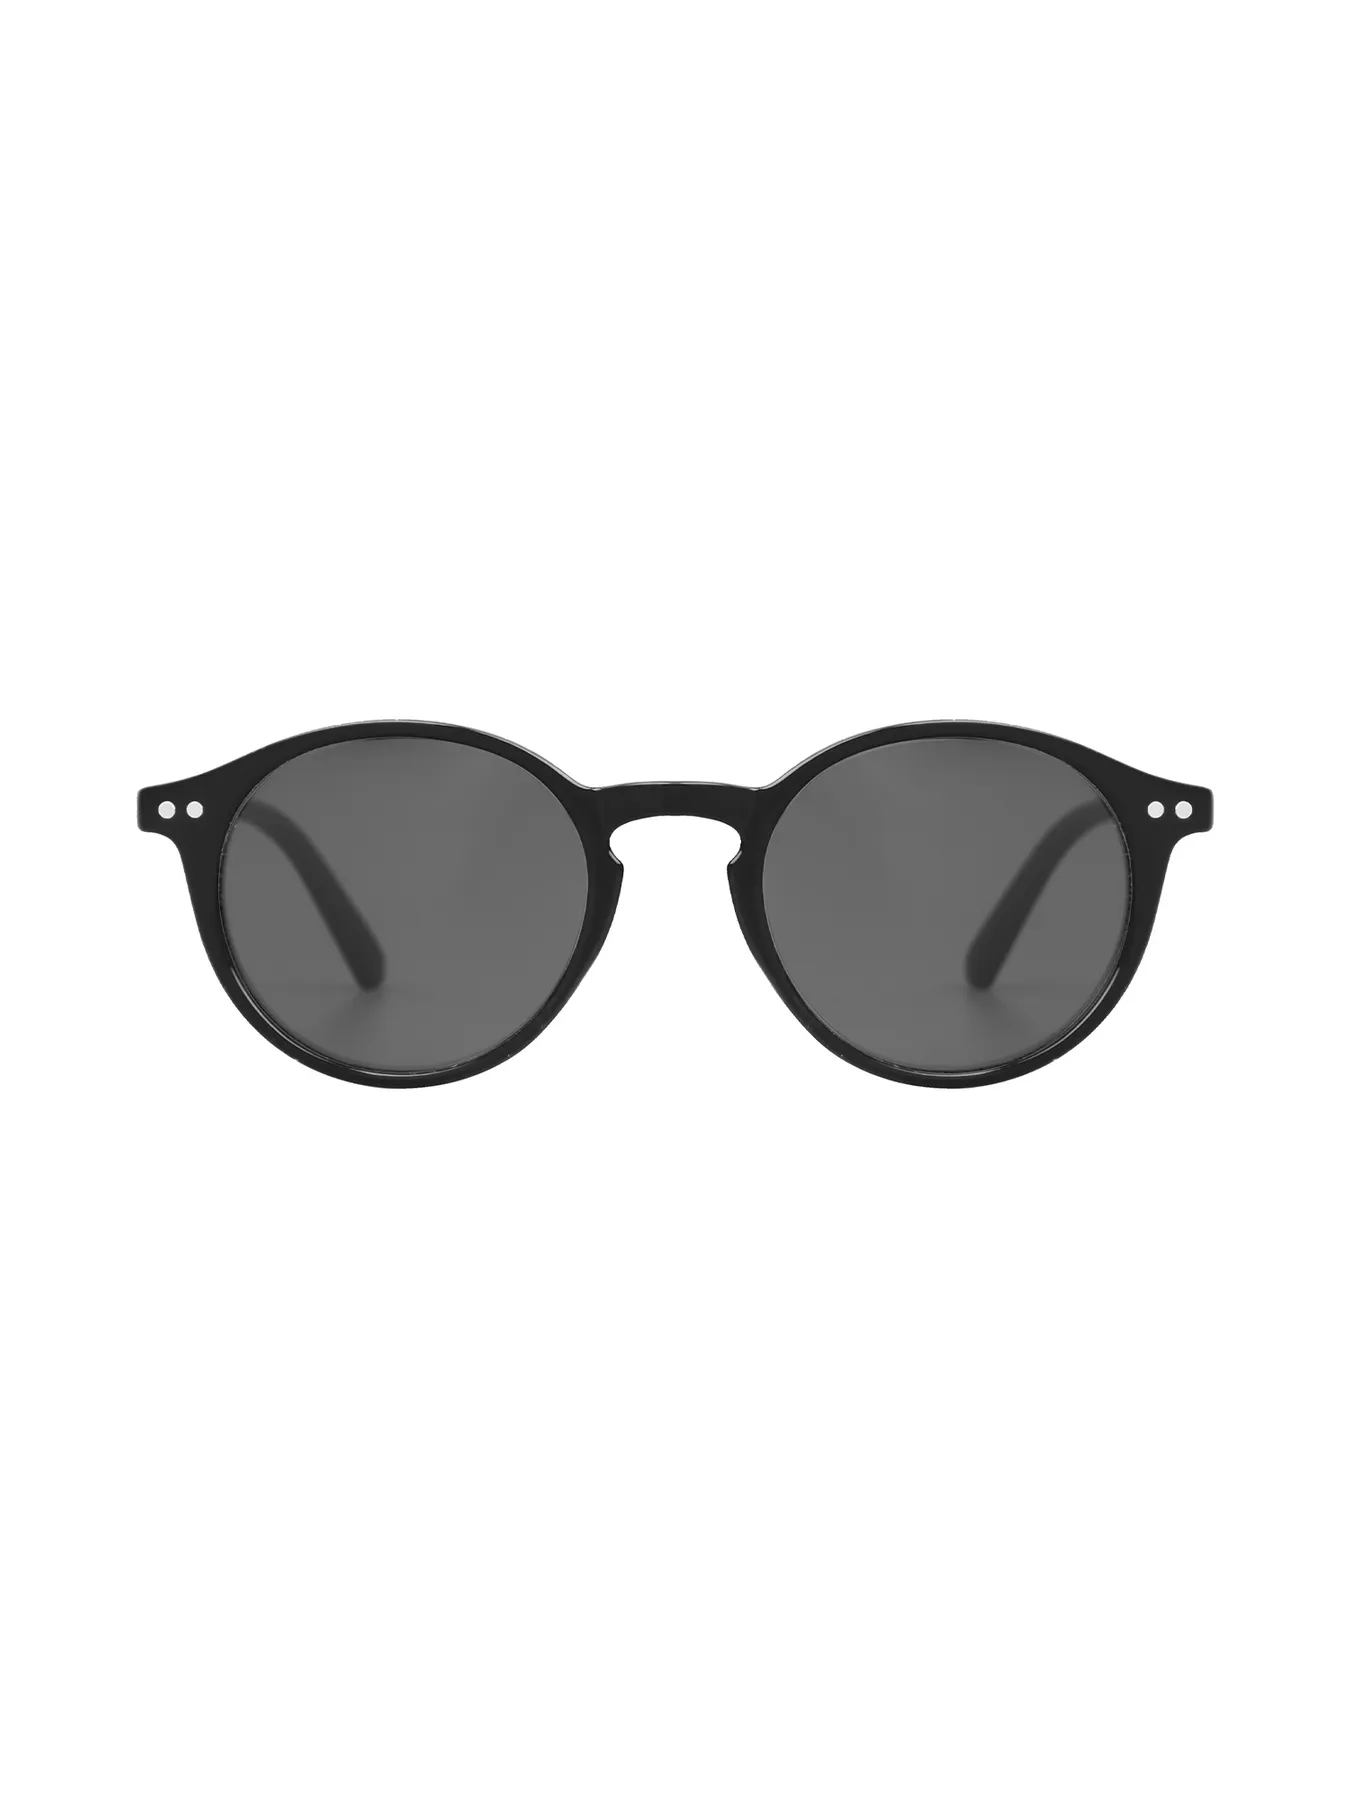 Sunglasses Round Black